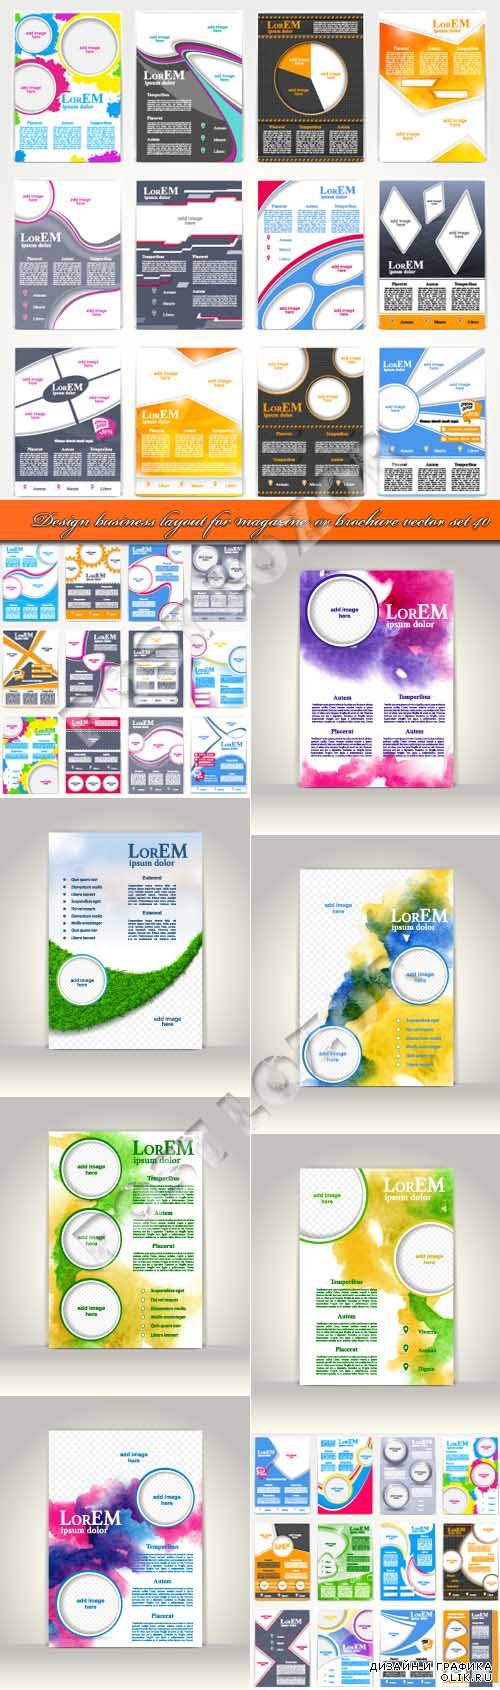 Design business layout for magazine or brochure vector set 40